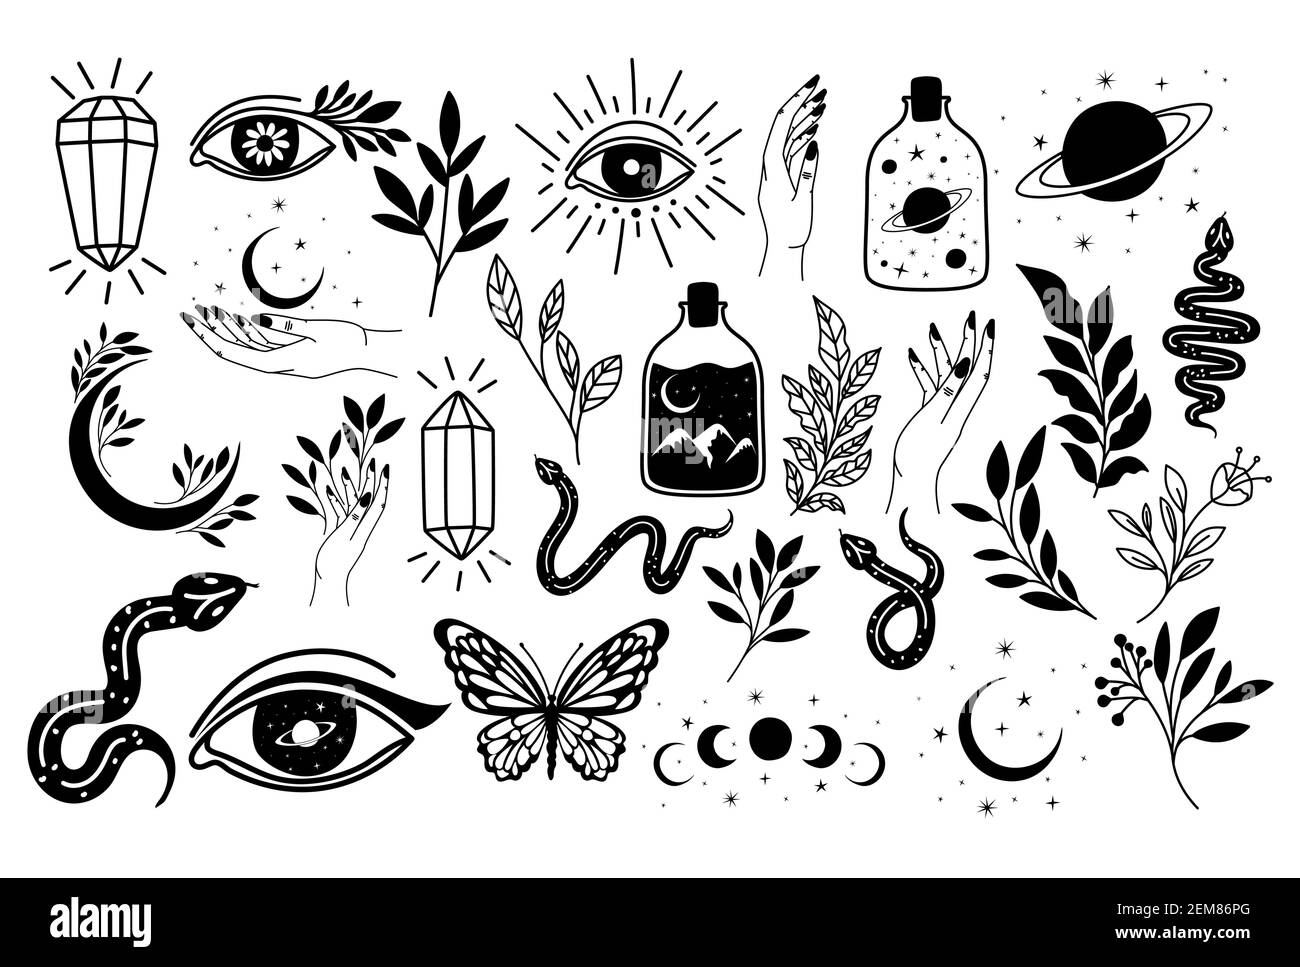 Anubis Design Fot Tattoo White Background Stock Illustration 1437355172 |  Shutterstock